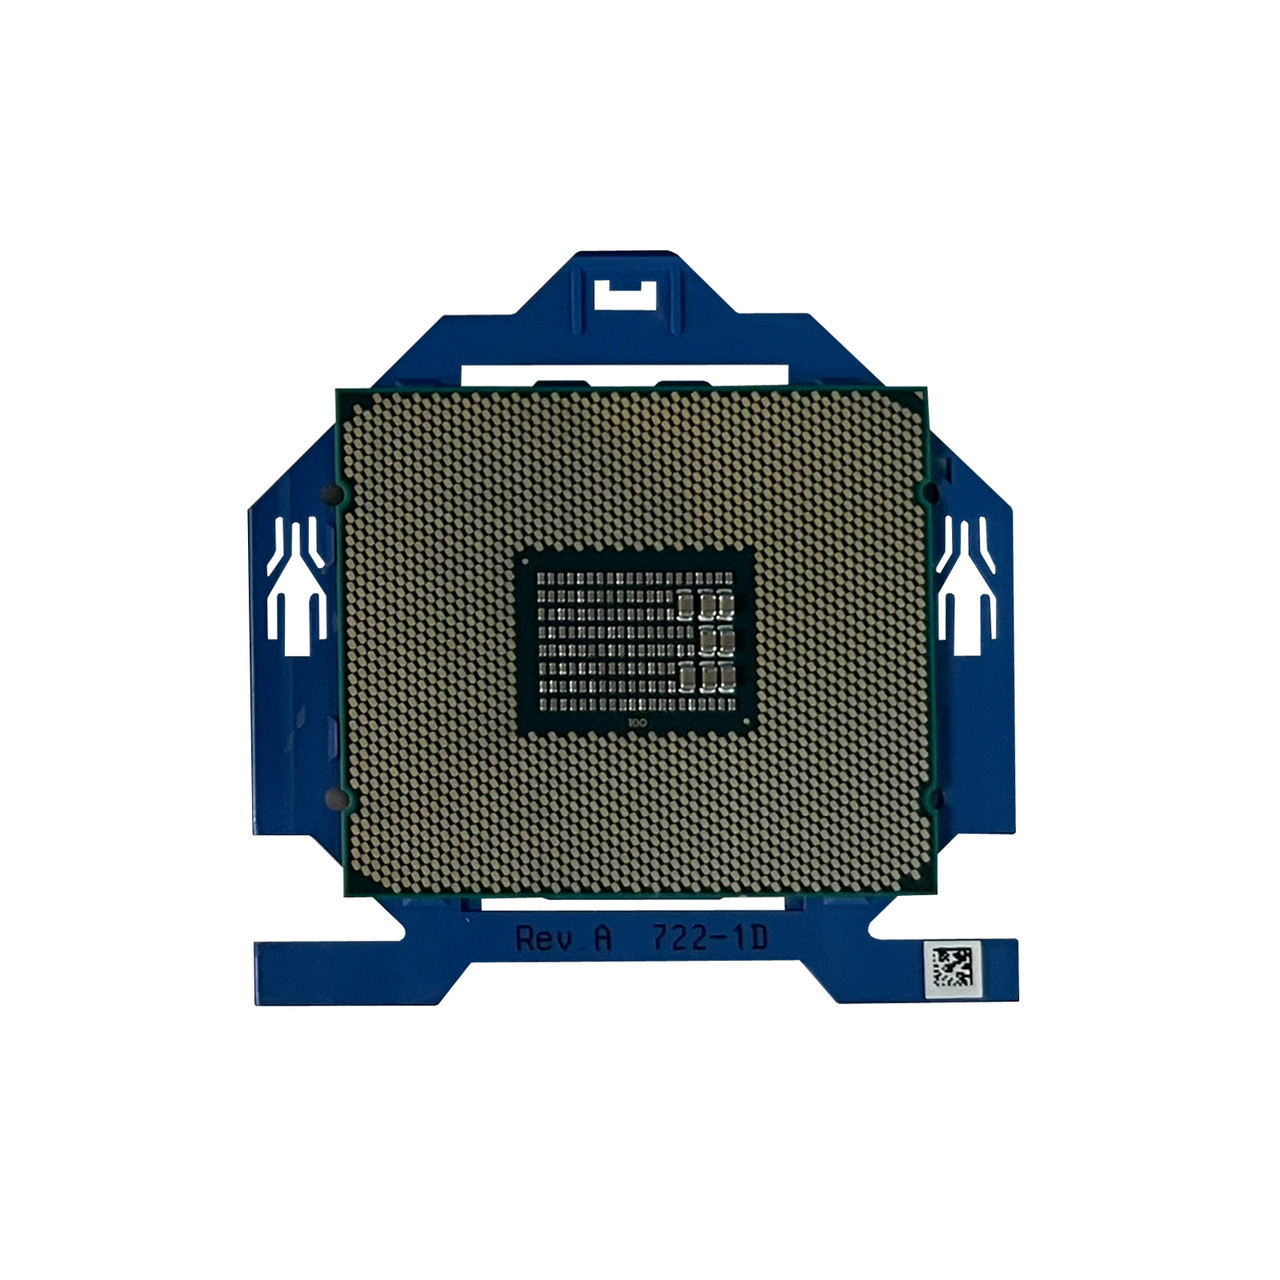 HP 826099-L21 ML110 Gen9 Xeon E5-2660 V4 14C 2.0Ghz Processor